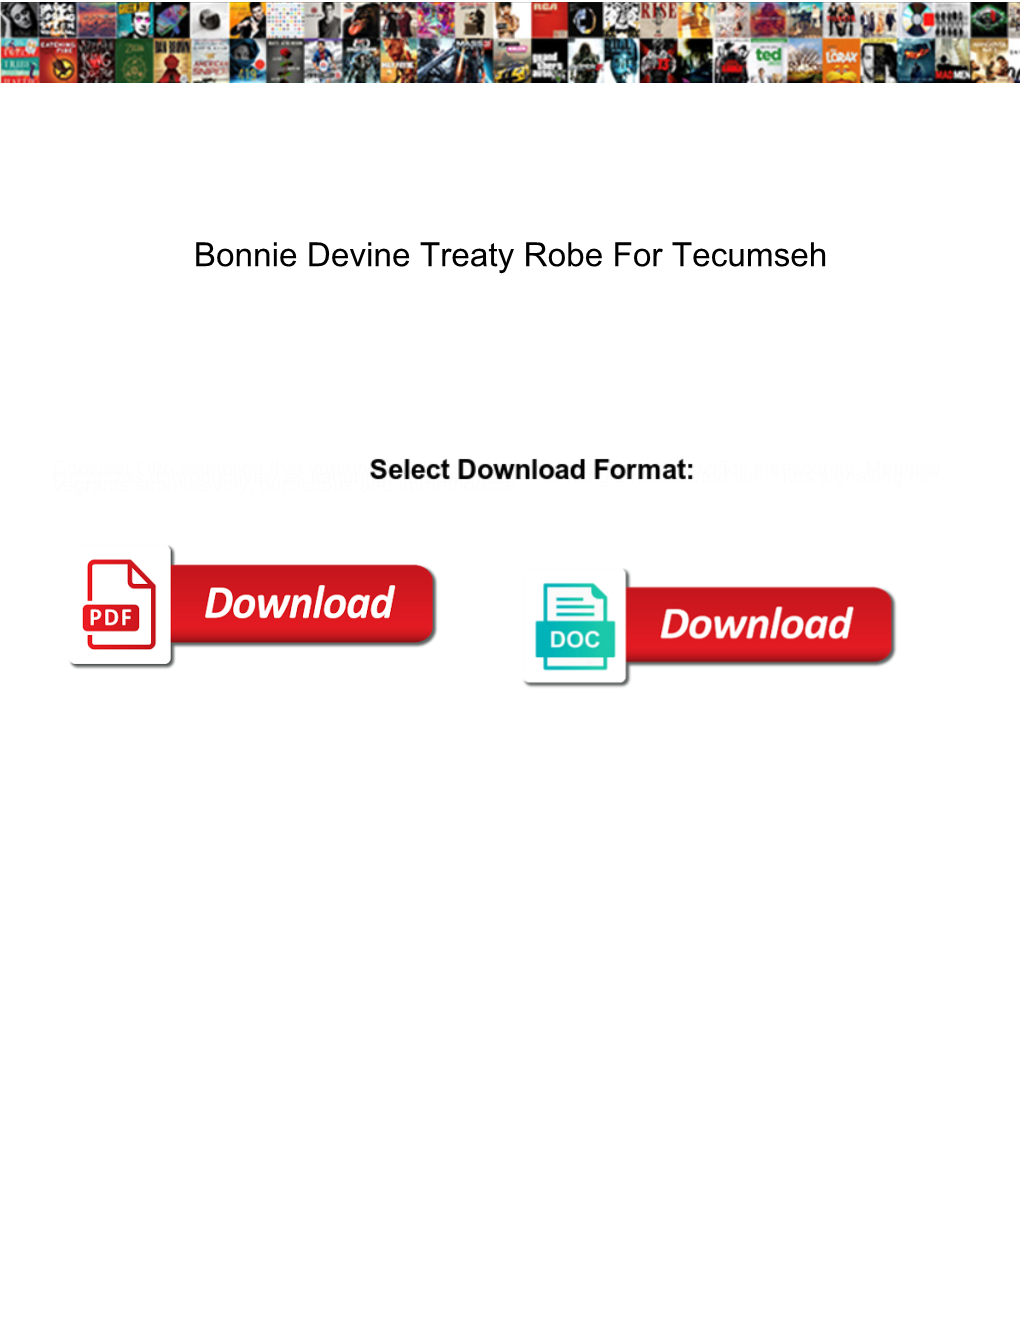 Bonnie Devine Treaty Robe for Tecumseh